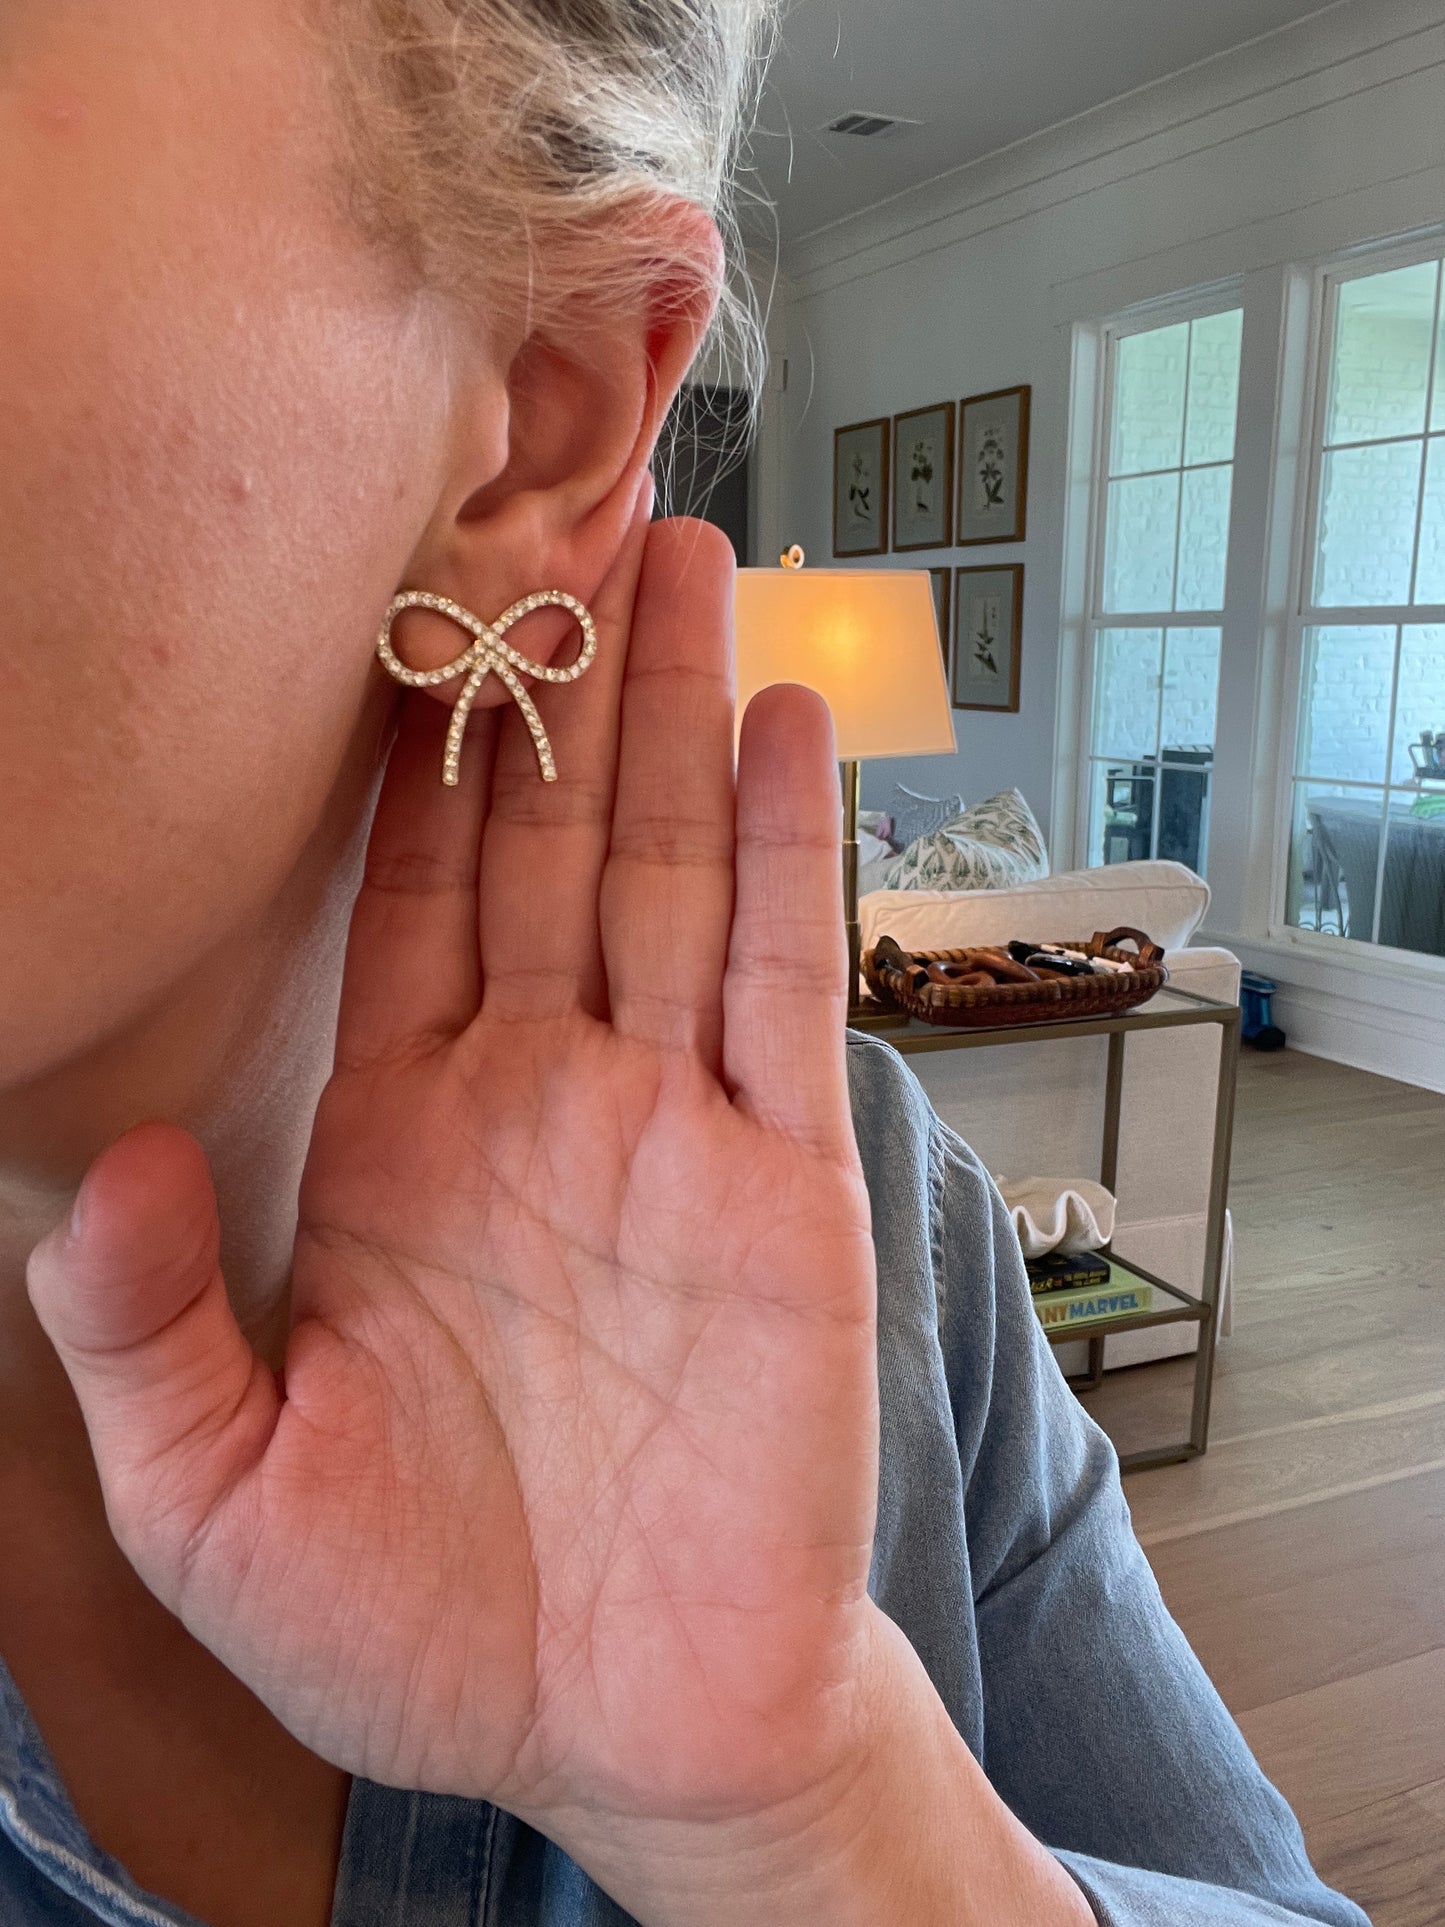 Rhinestone Bow Earrings